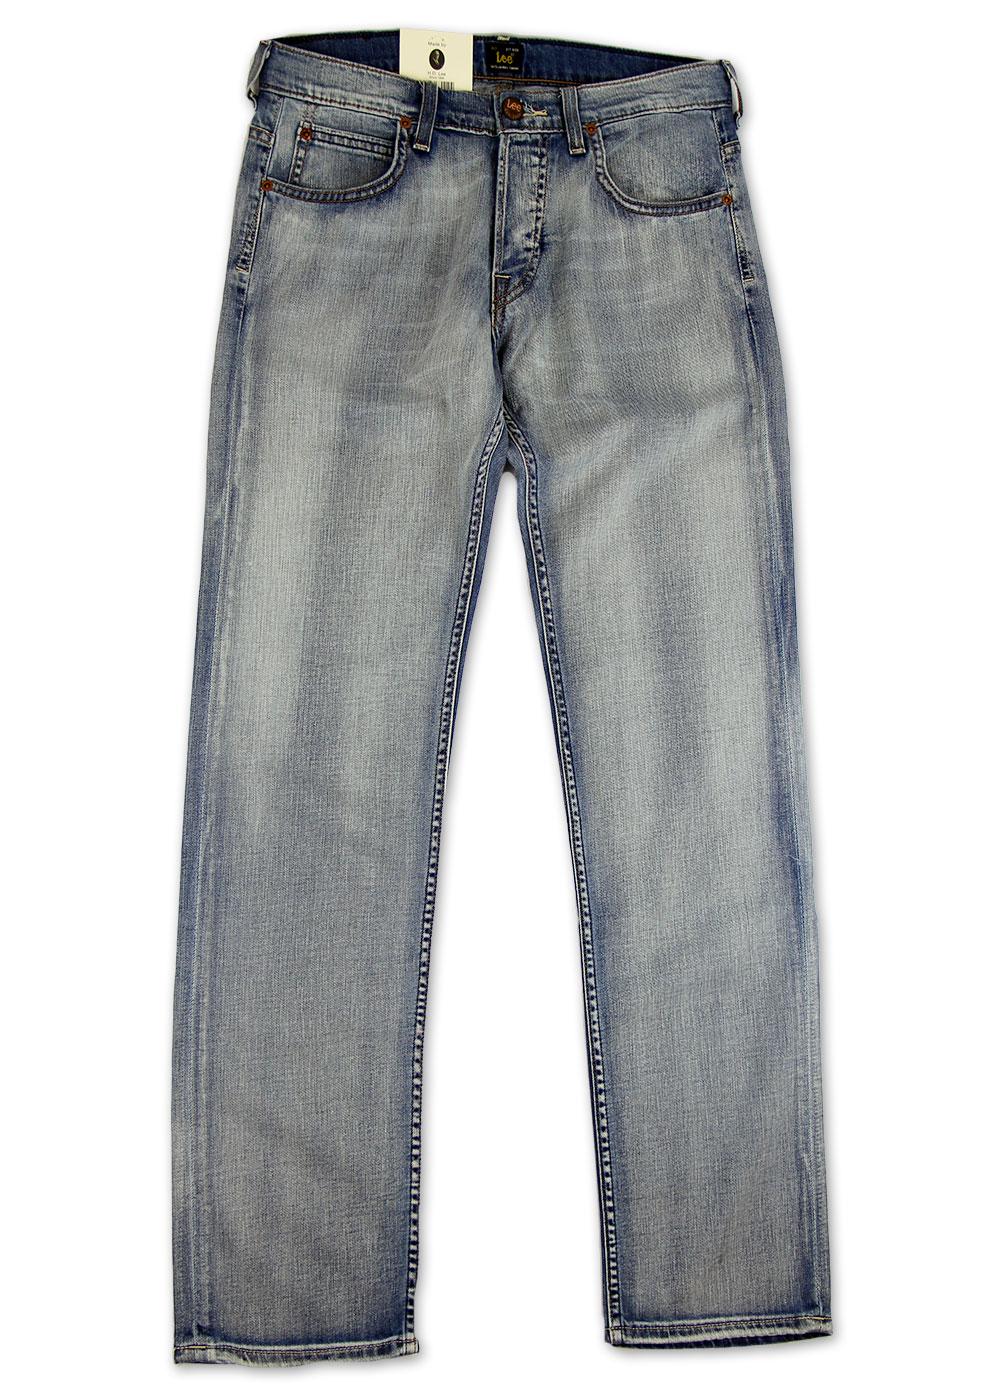 LEE JEANS Powell Retro Mod Low Slim Fit Jeans Blue Fade